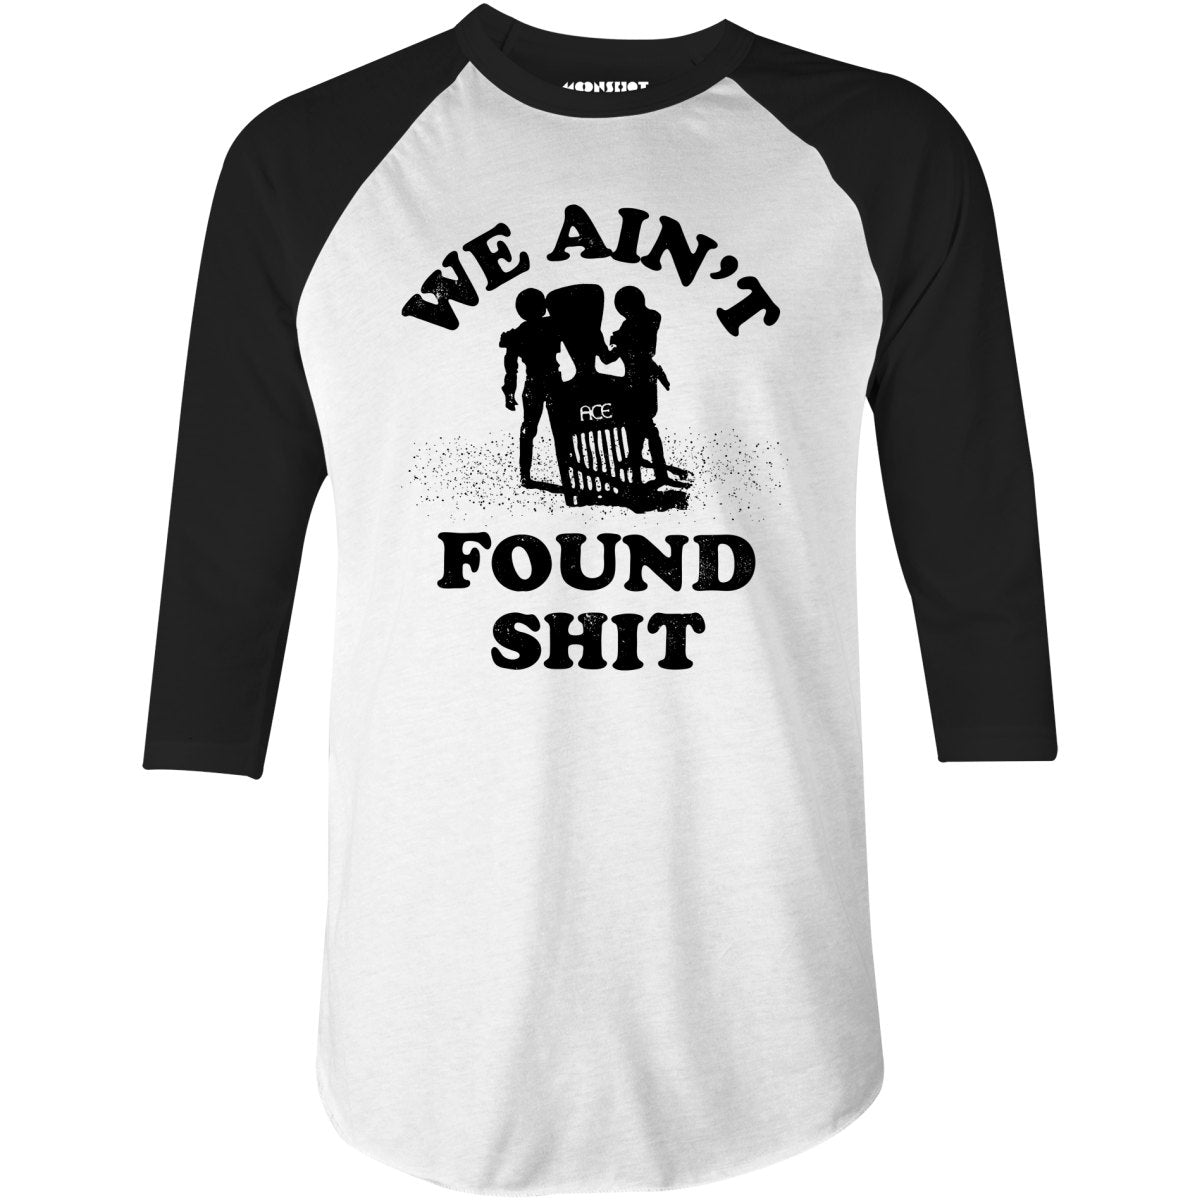 We Ain't Found Shit - 3/4 Sleeve Raglan T-Shirt